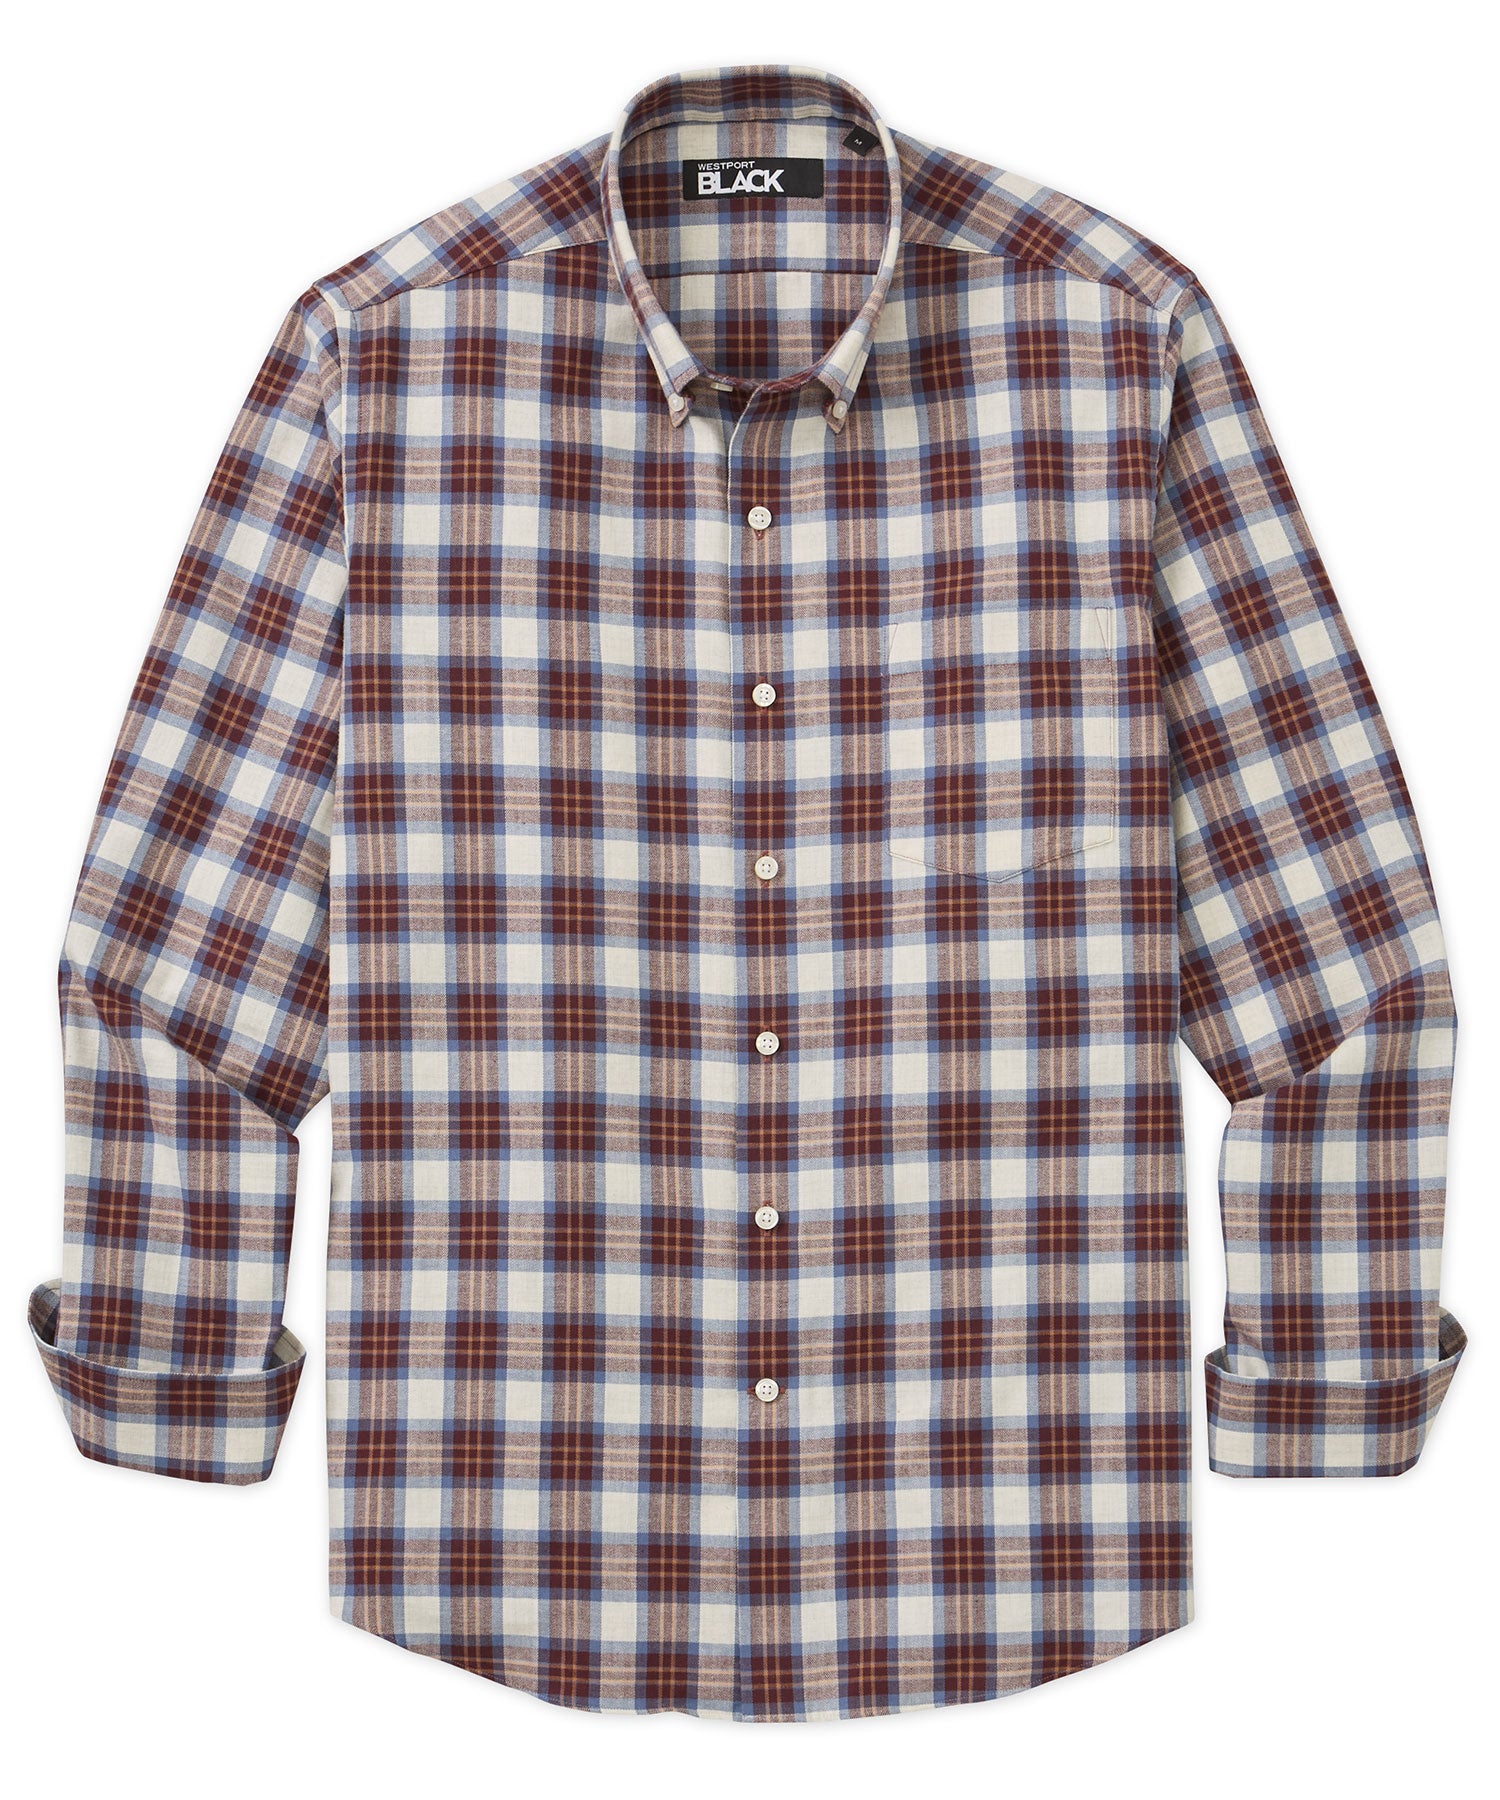 Westport Black Long Sleeve Soft Wash Flannel Sport Shirt, Men's Big & Tall